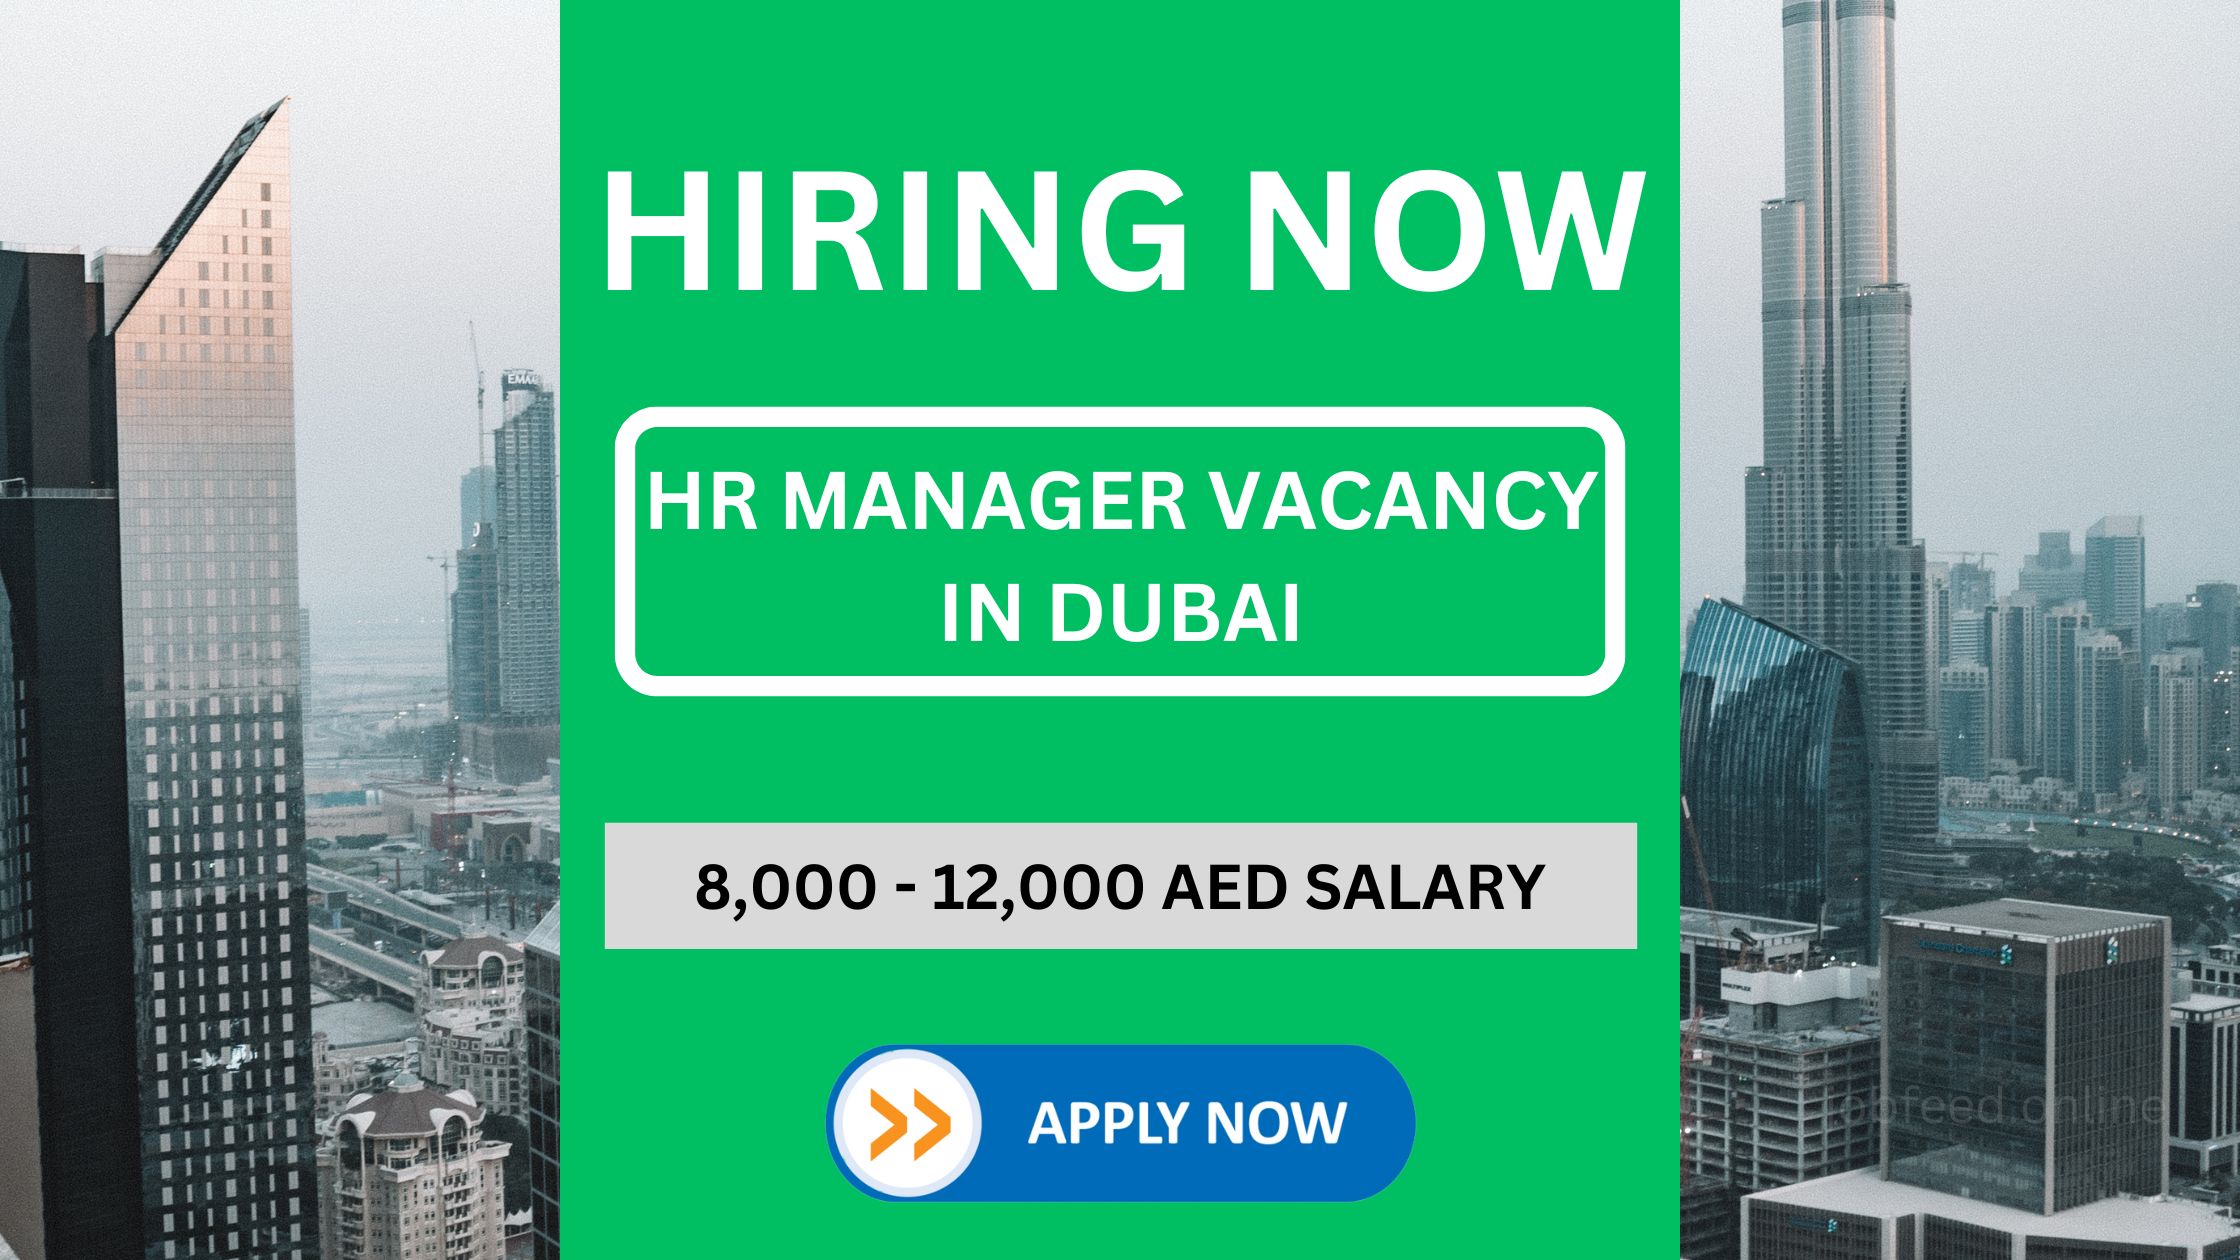 Seeking an HR with Dubai Real Estate Experience